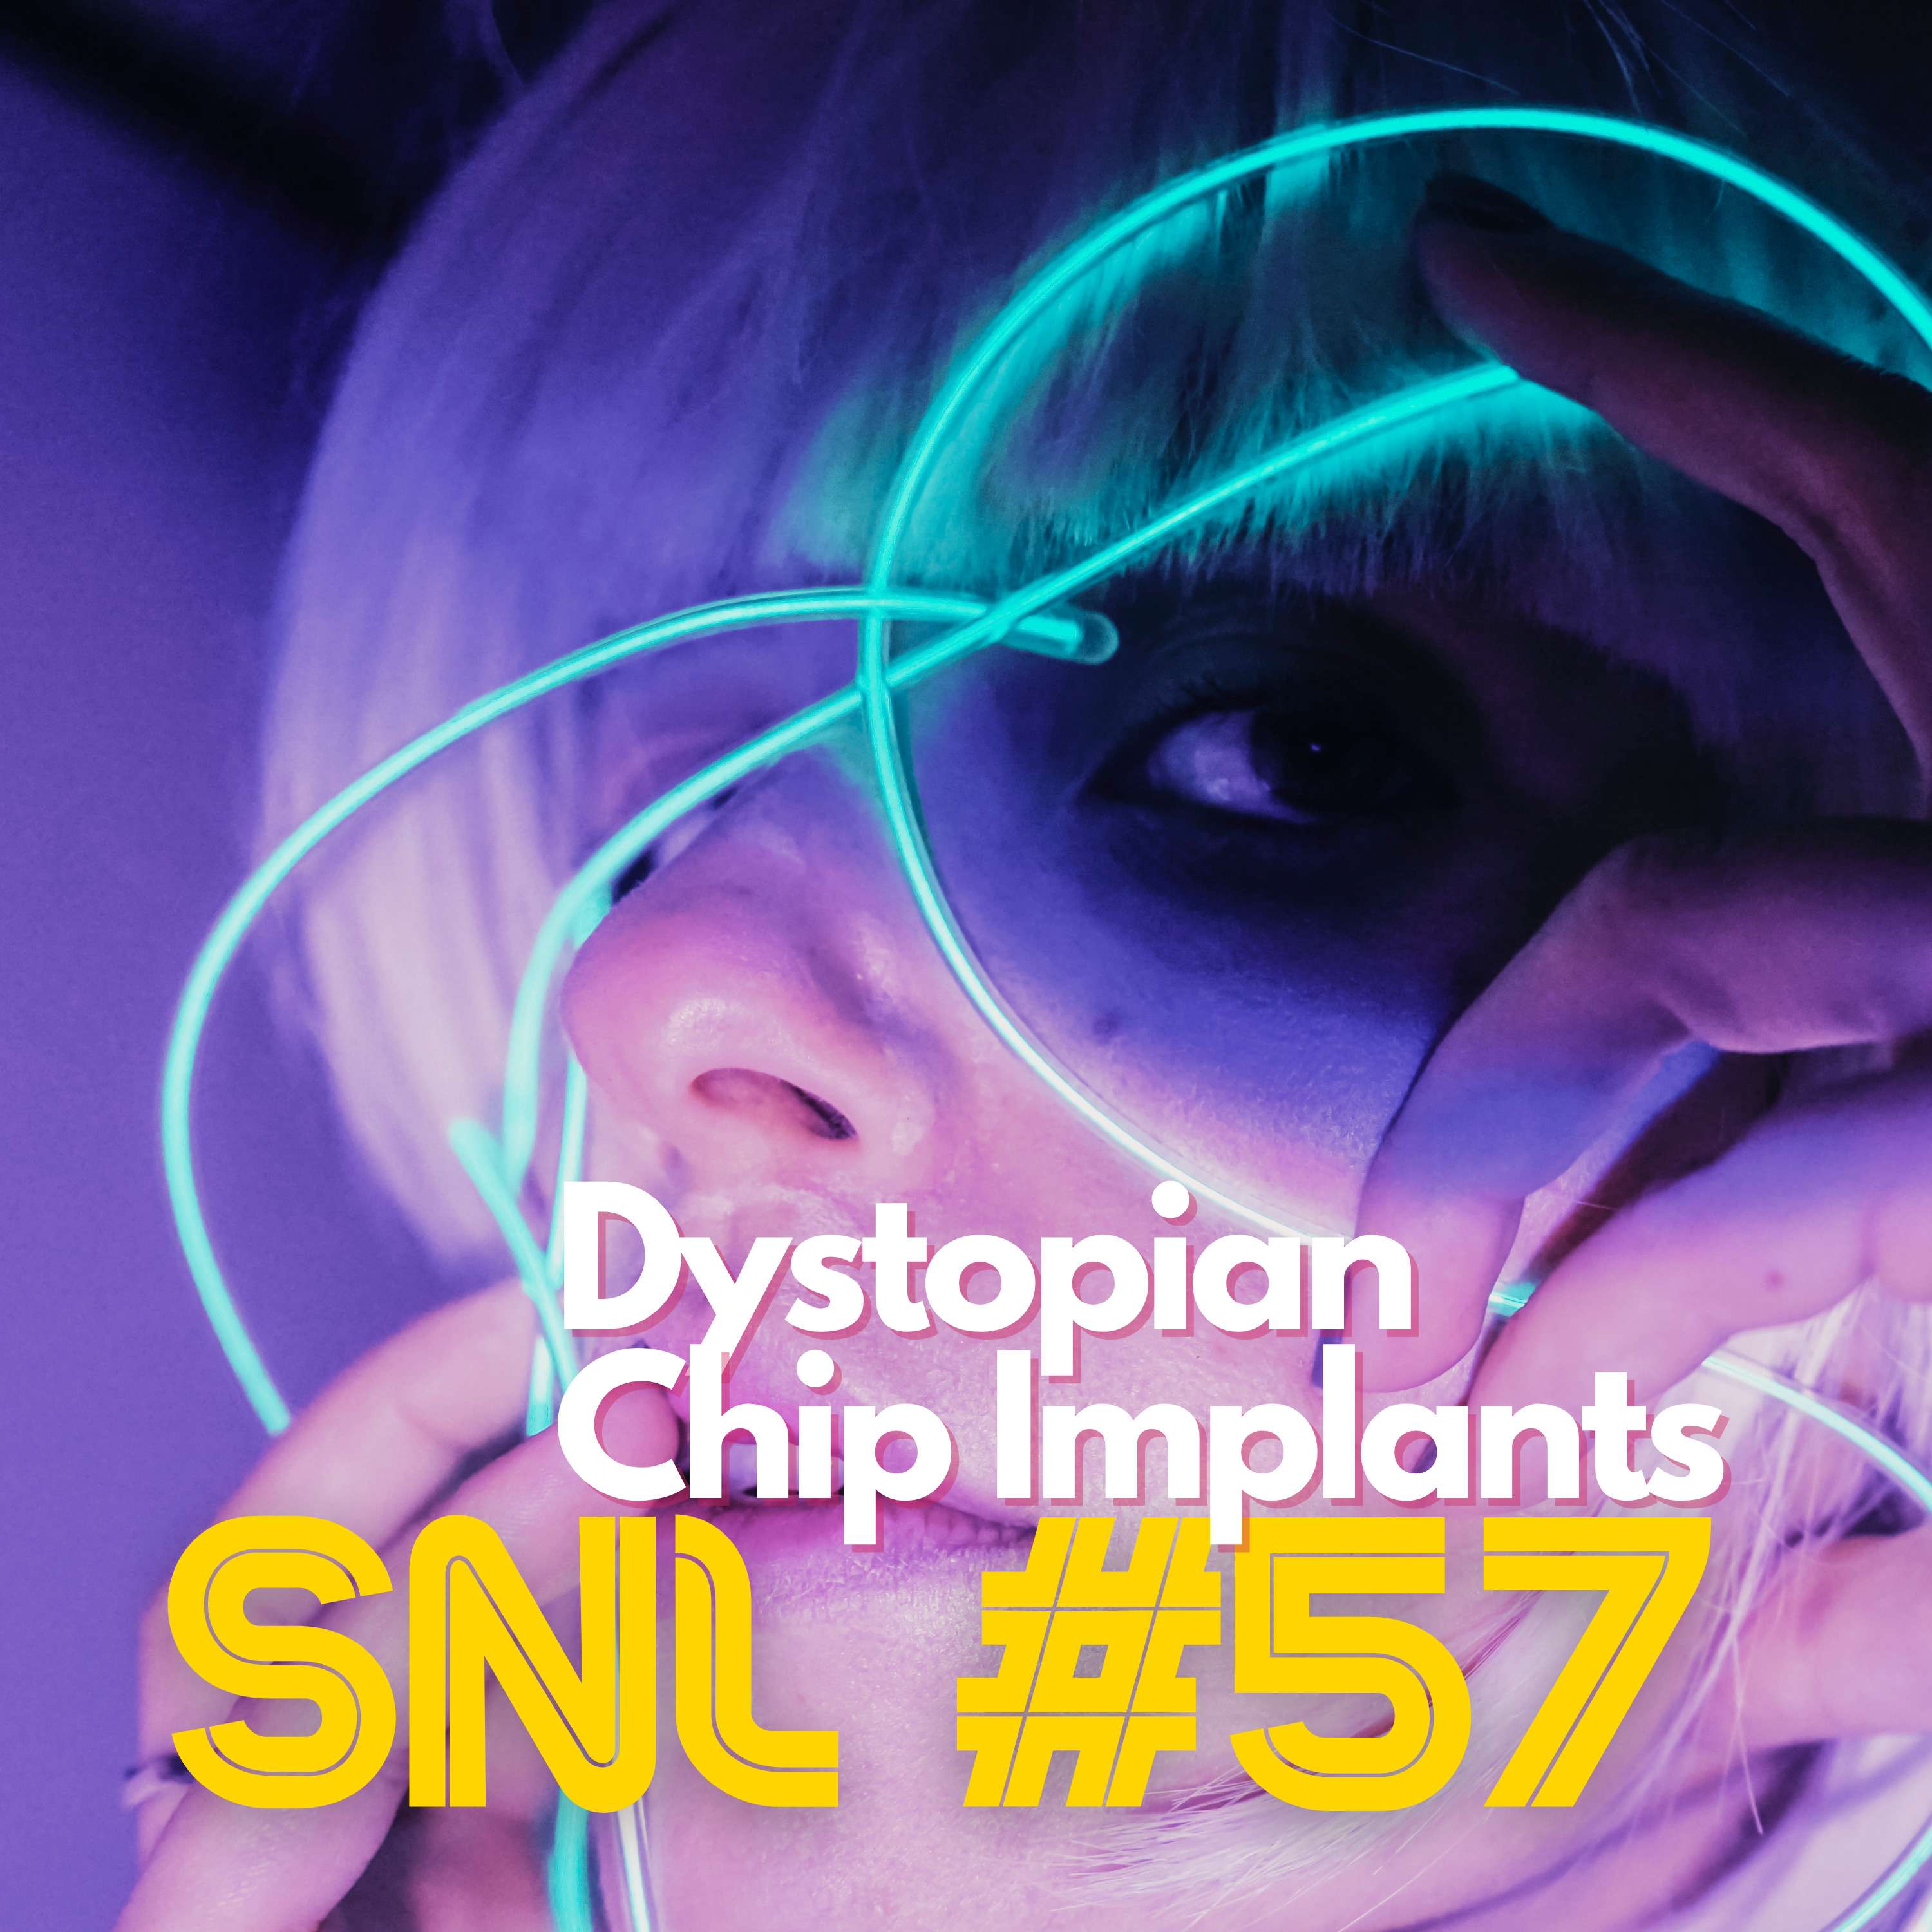 SNL #58: Dystopian Chip Implants